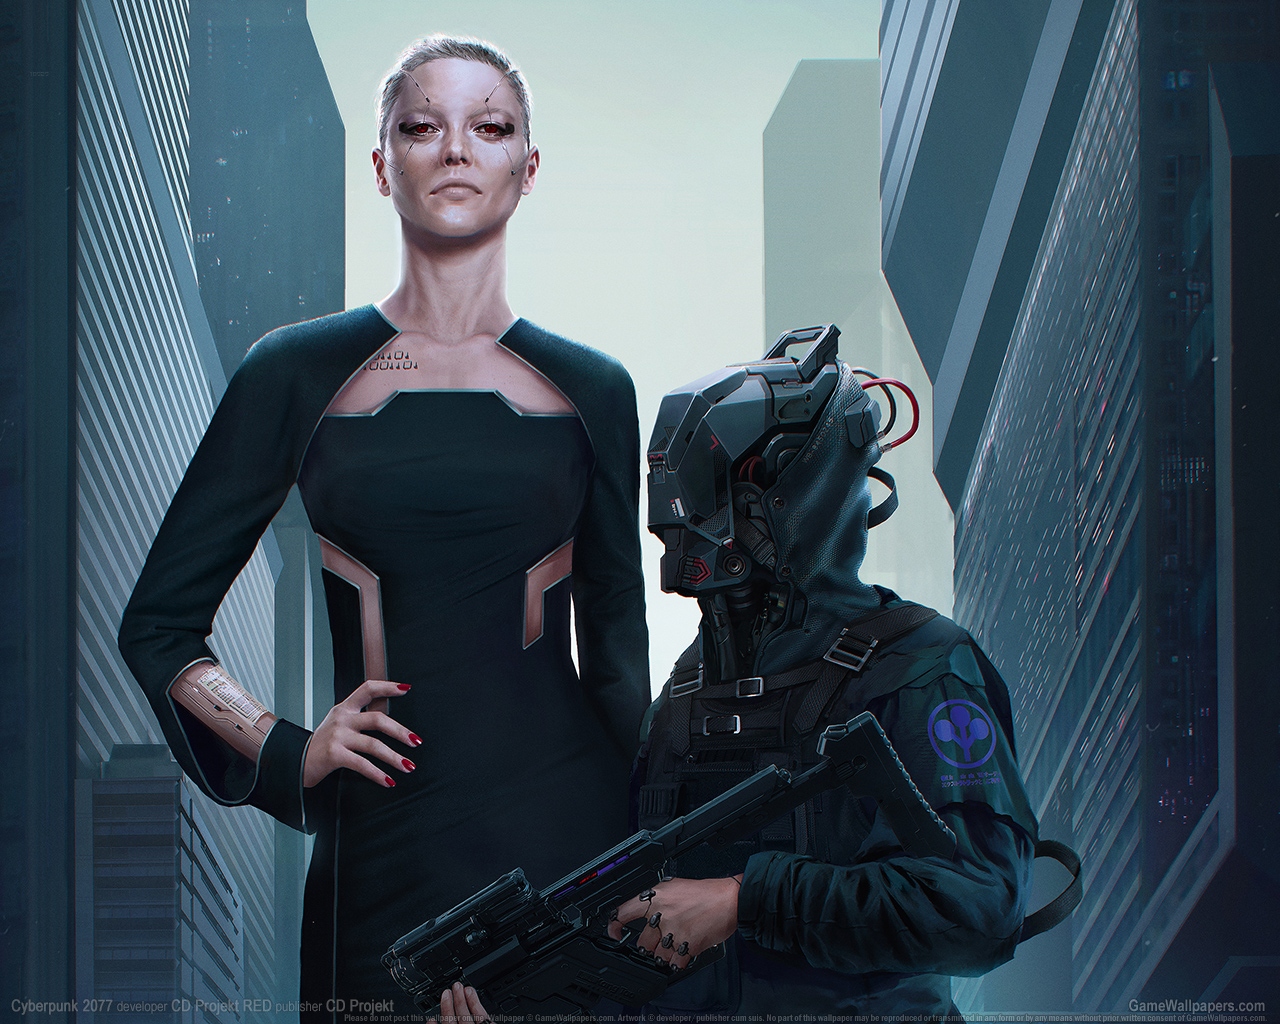 Cyberpunk 2077 1280 wallpaper or background 22